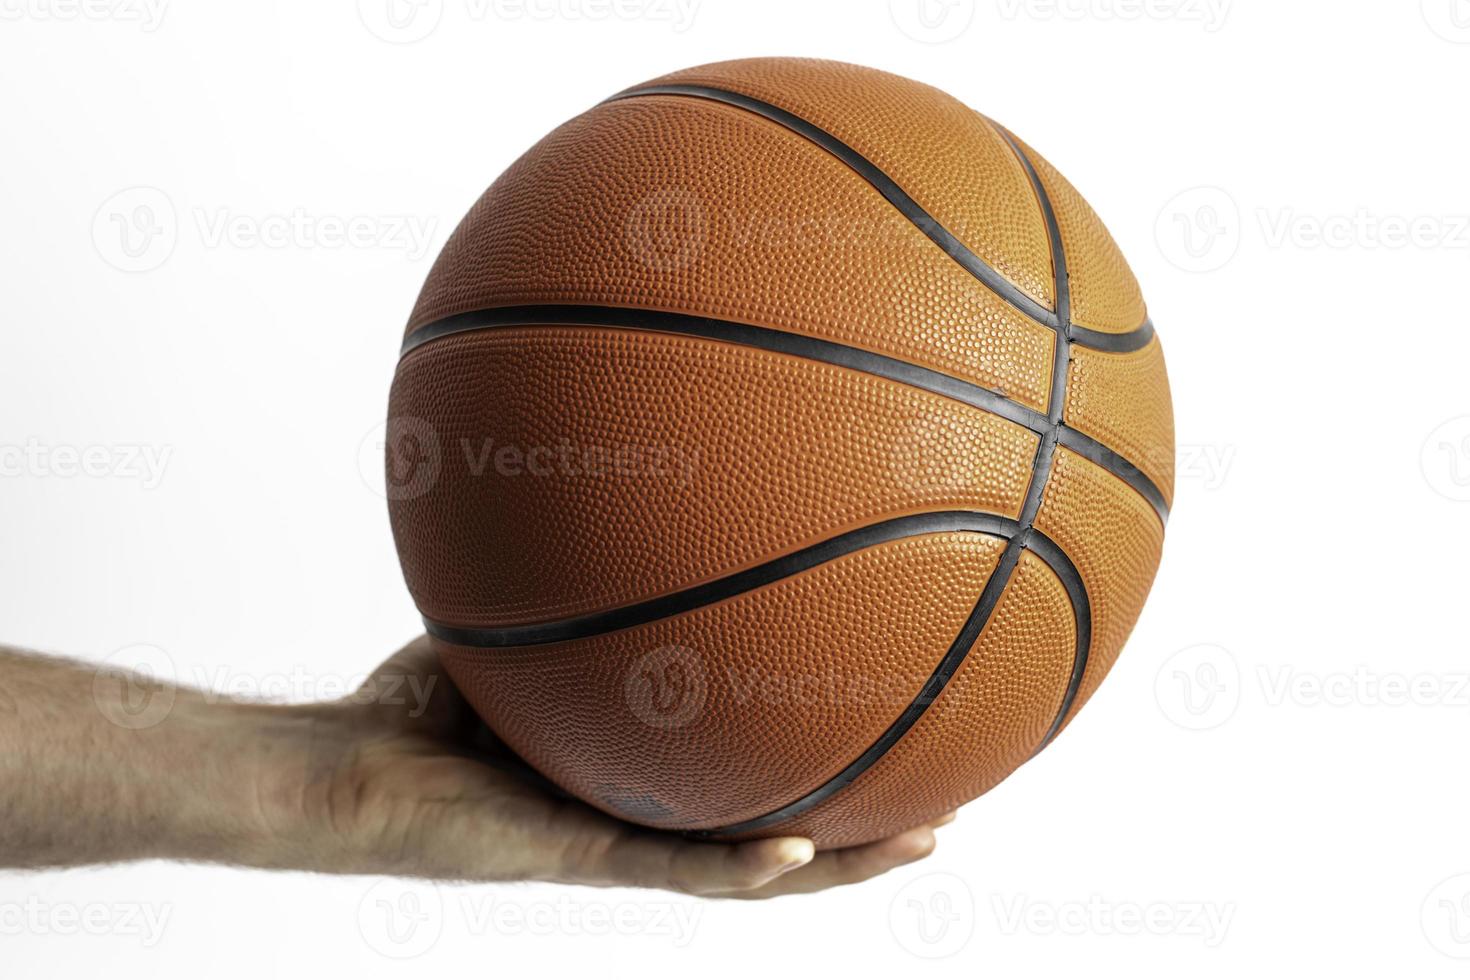 Holding A Basketball photo